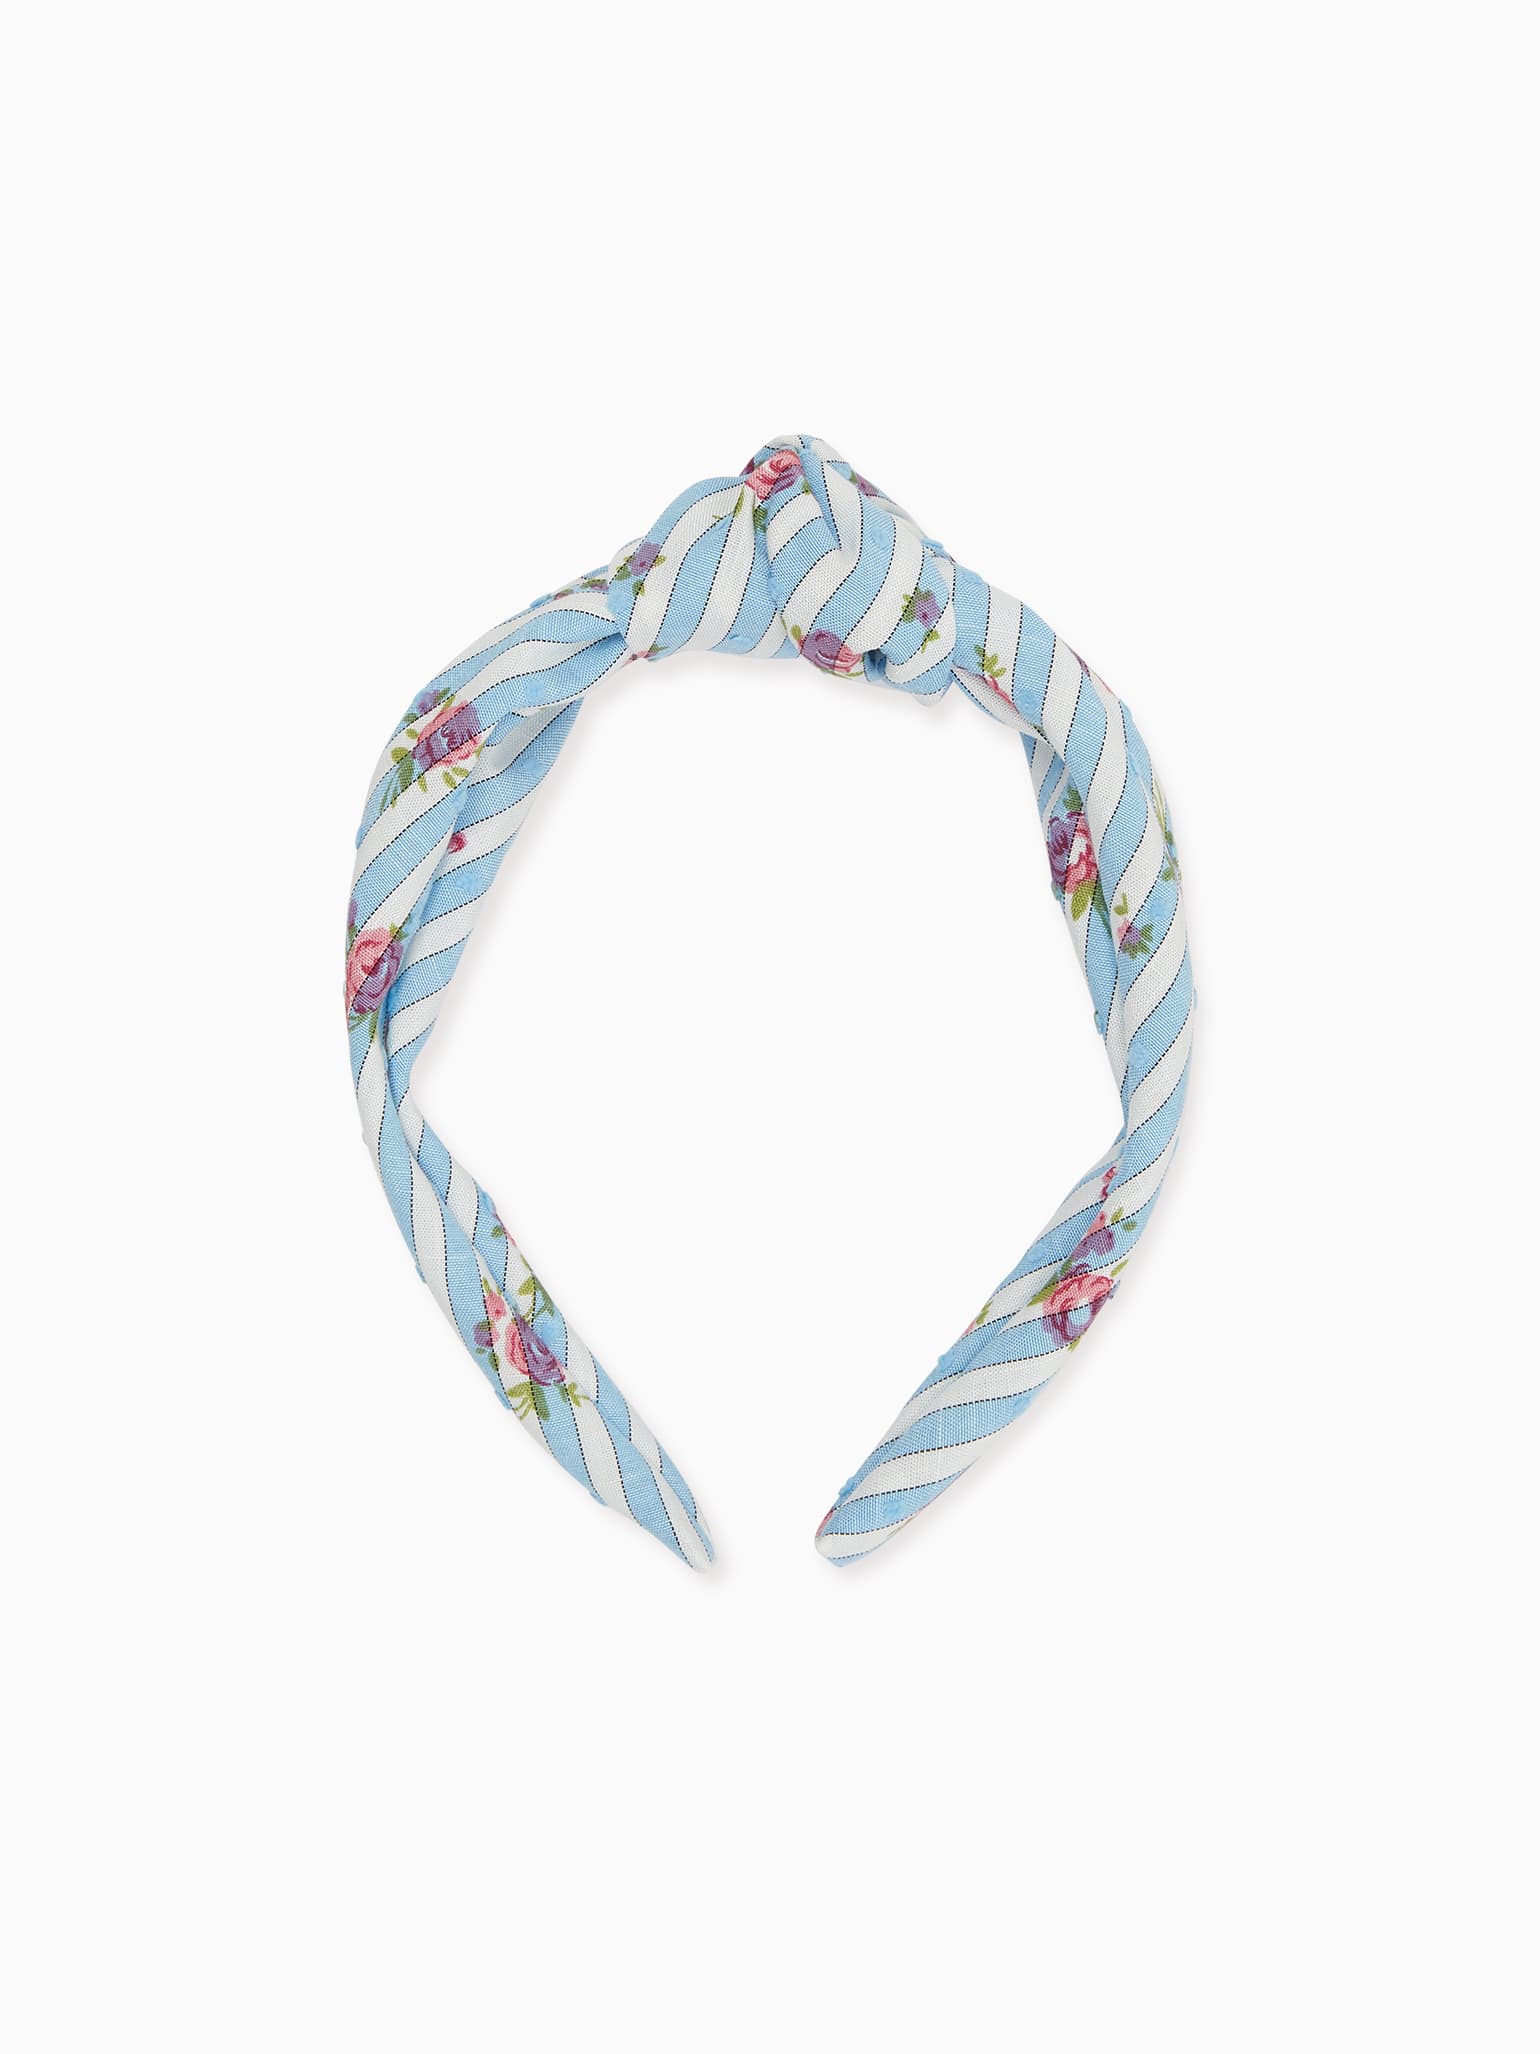 Blue Stripe Top Knot Girl Headband